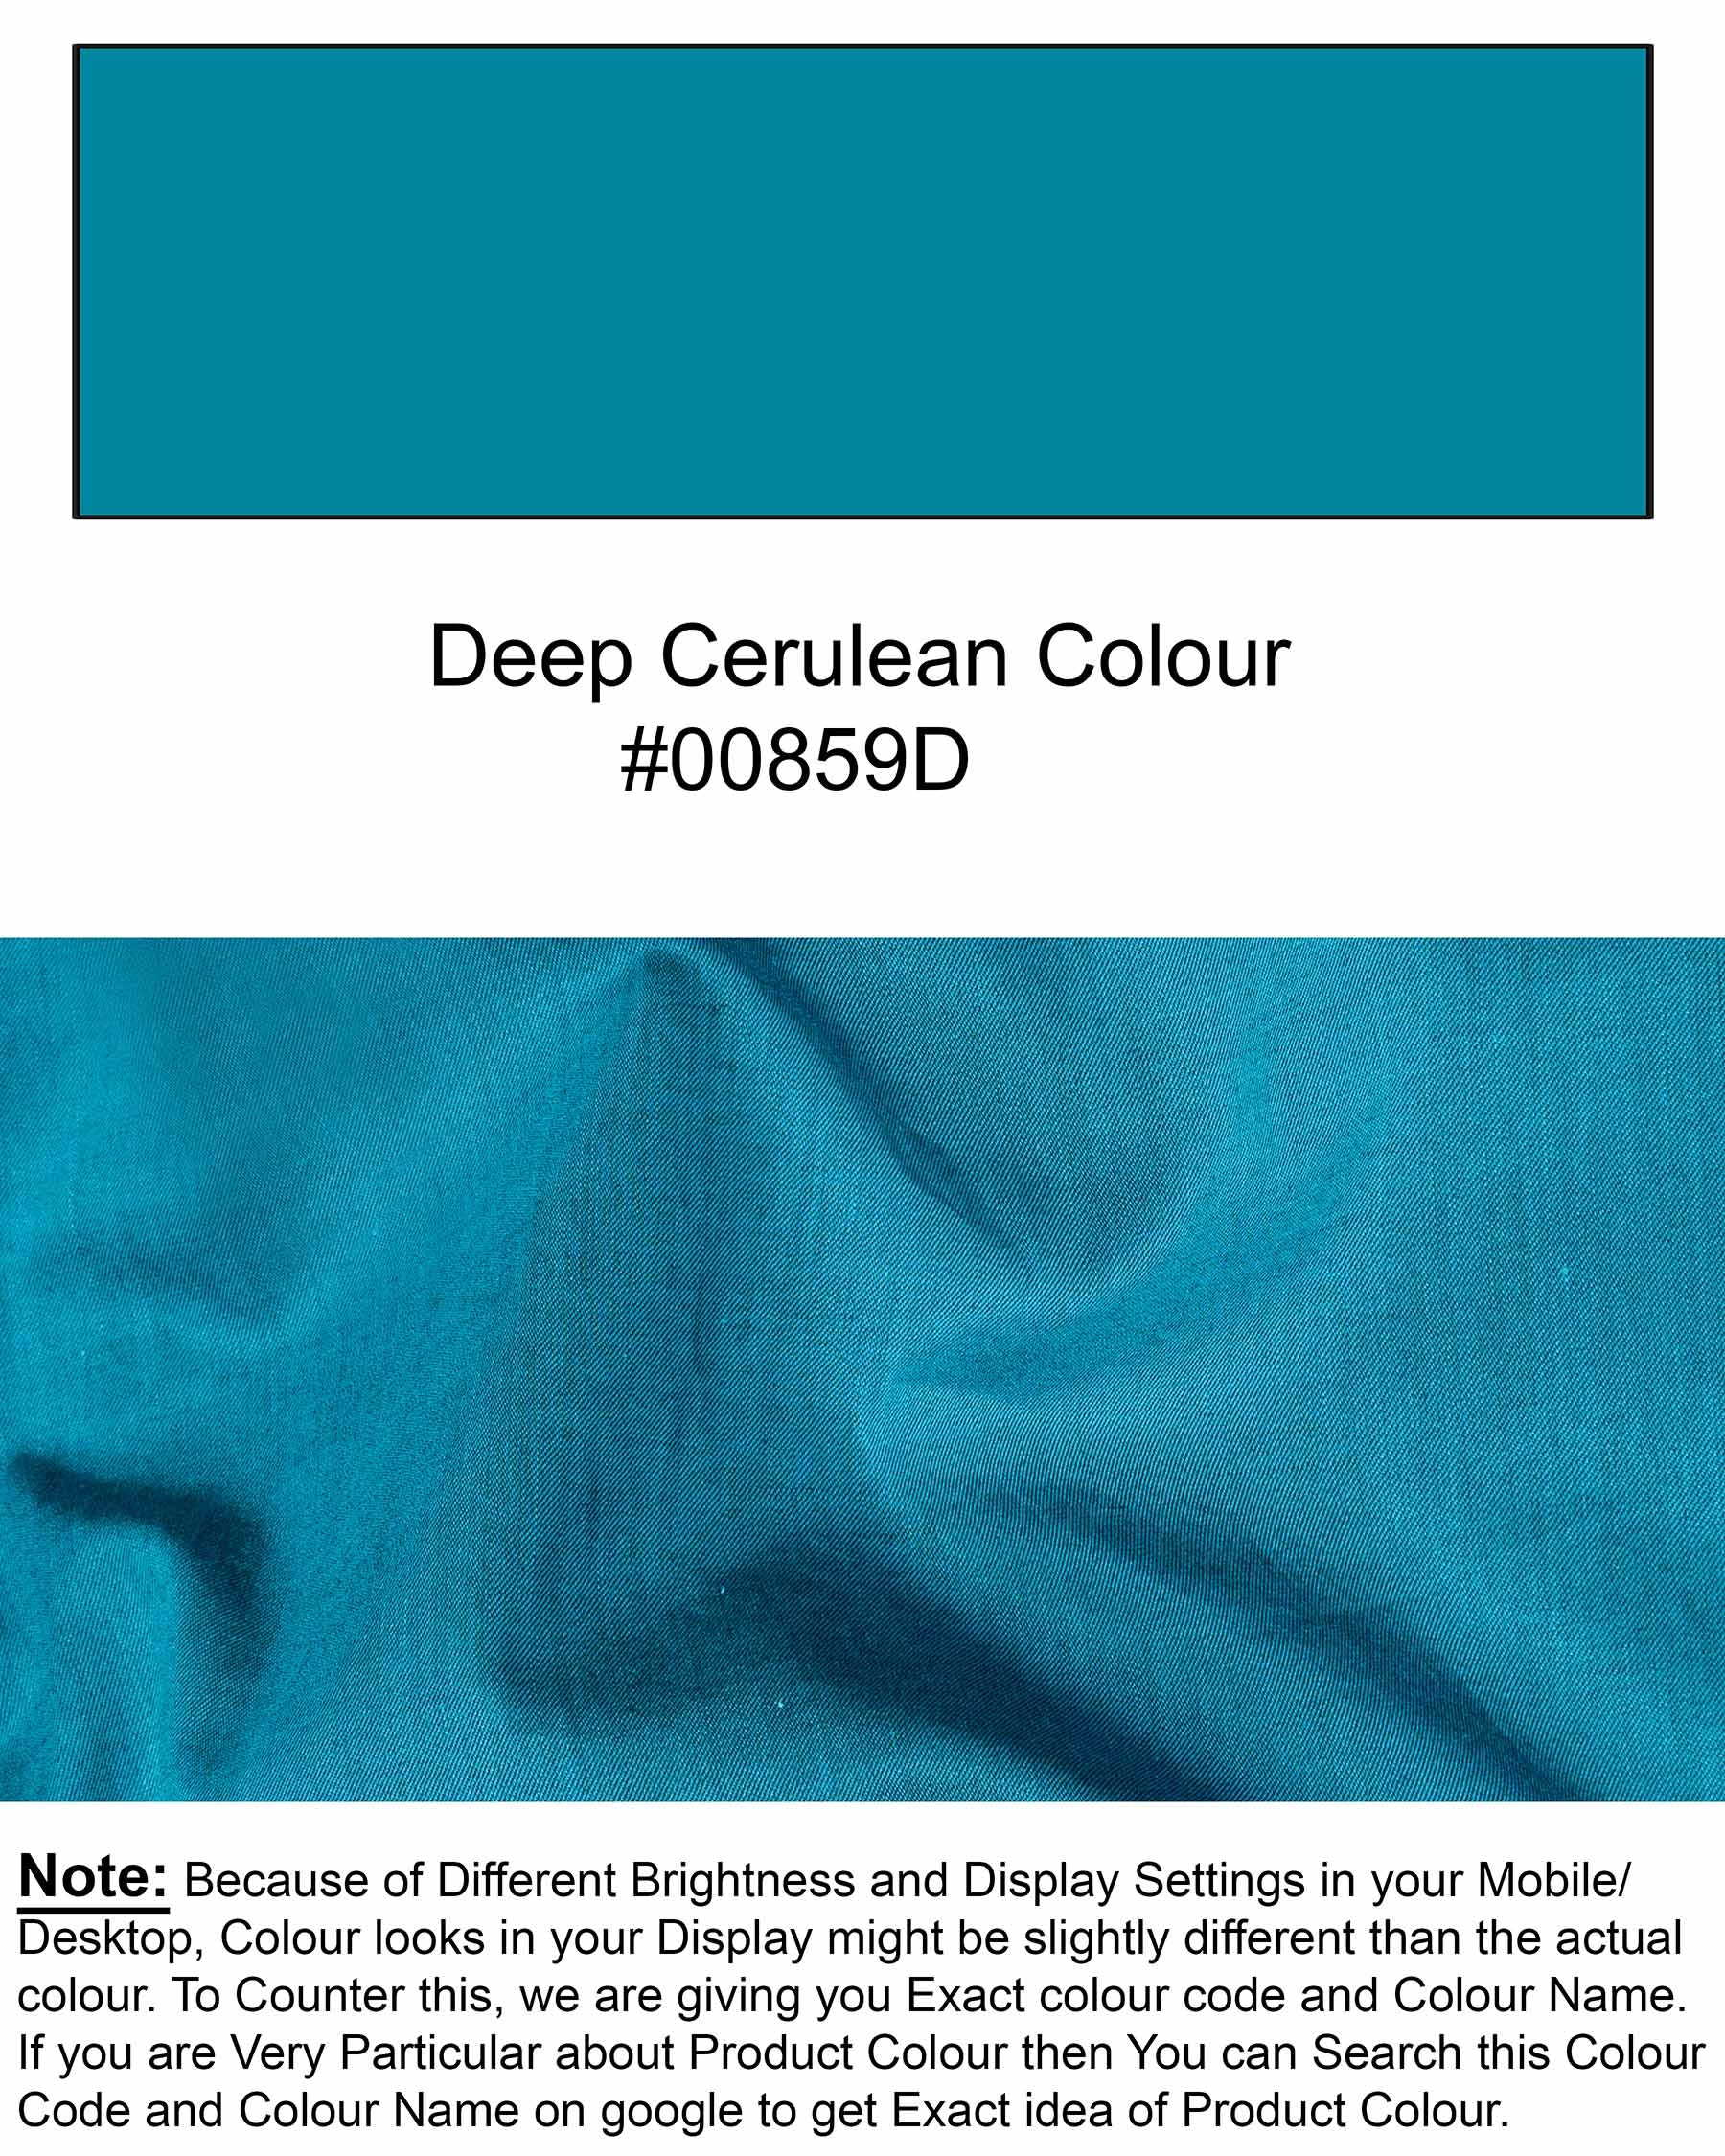  Deep Cerulean Blue Chambray Textured Premium Cotton Shirt  6590-38,6590-H-38,6590-39,6590-H-39,6590-40,6590-H-40,6590-42,6590-H-42,6590-44,6590-H-44,6590-46,6590-H-46,6590-48,6590-H-48,6590-50,6590-H-50,6590-52,6590-H-52